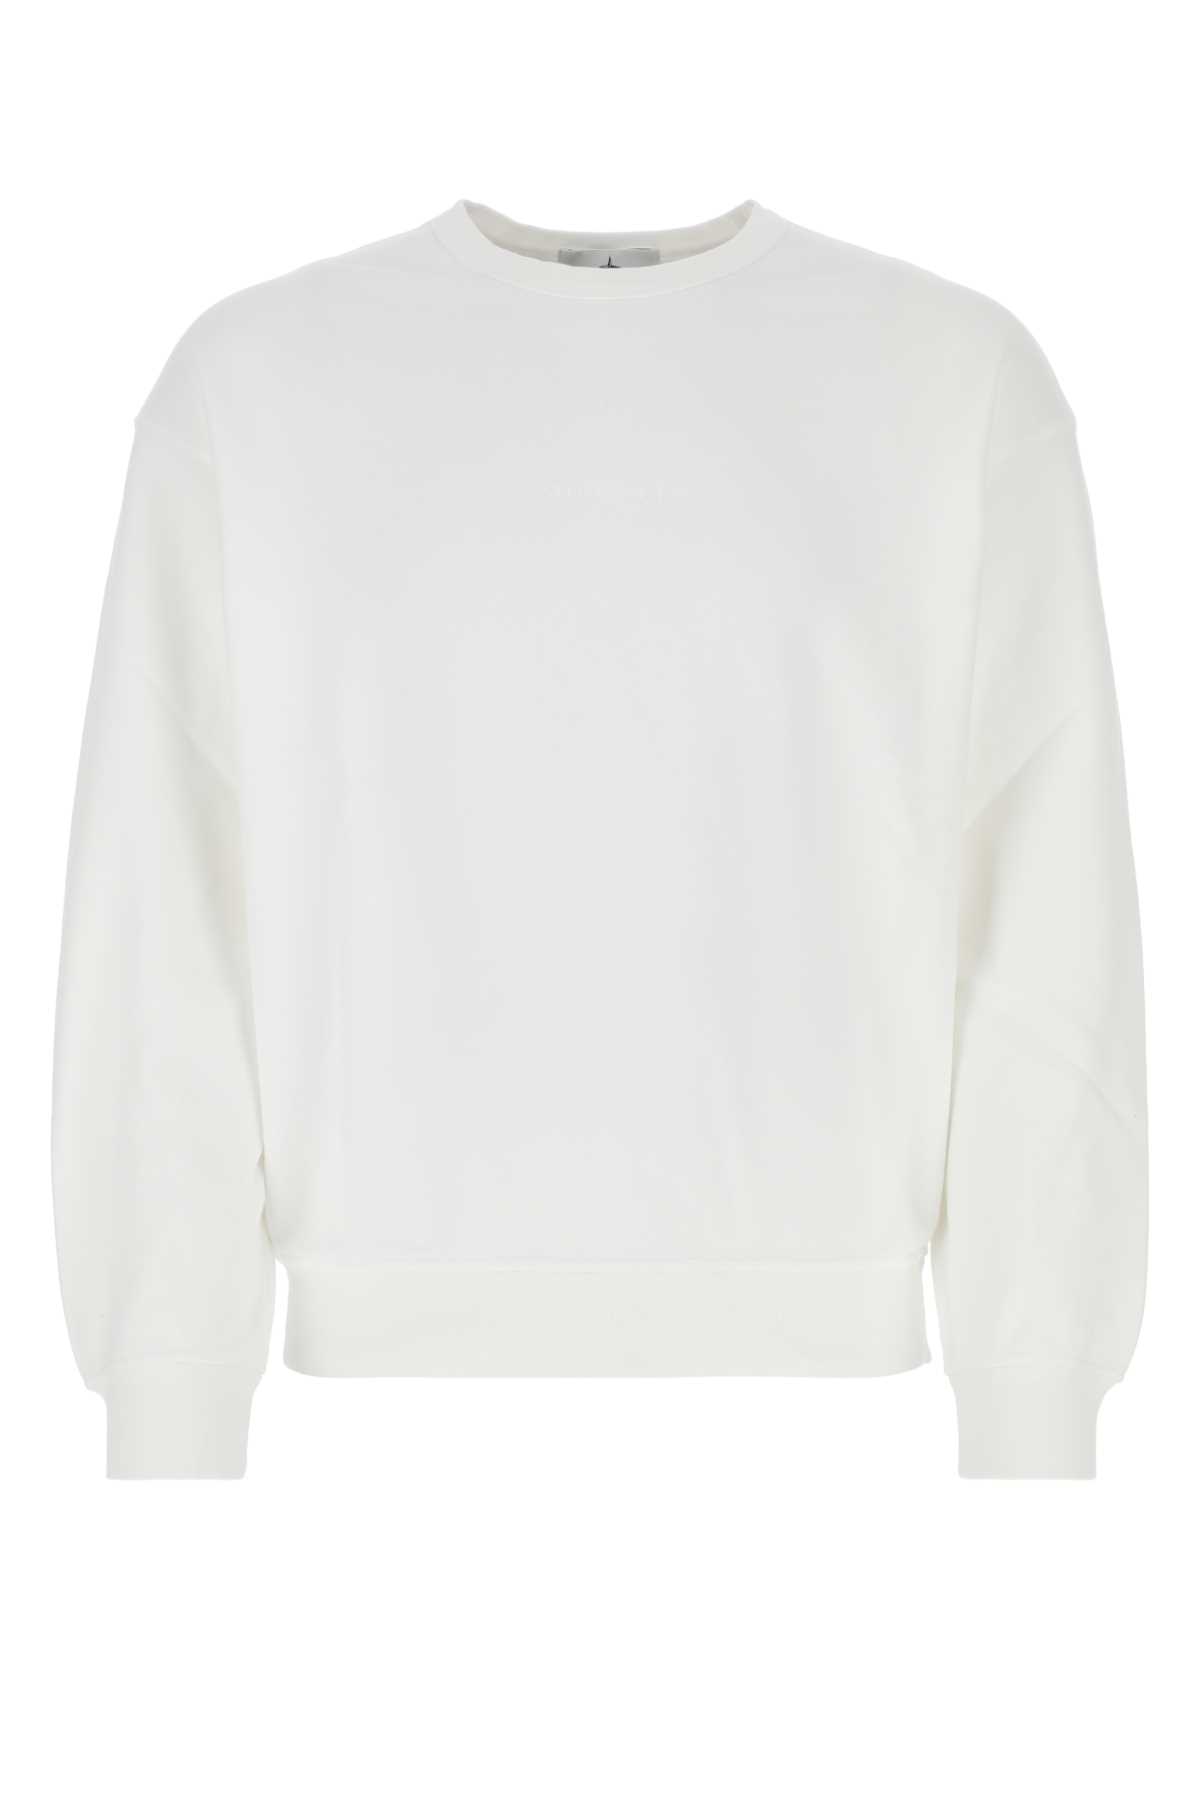 White Cotton Sweatshirt